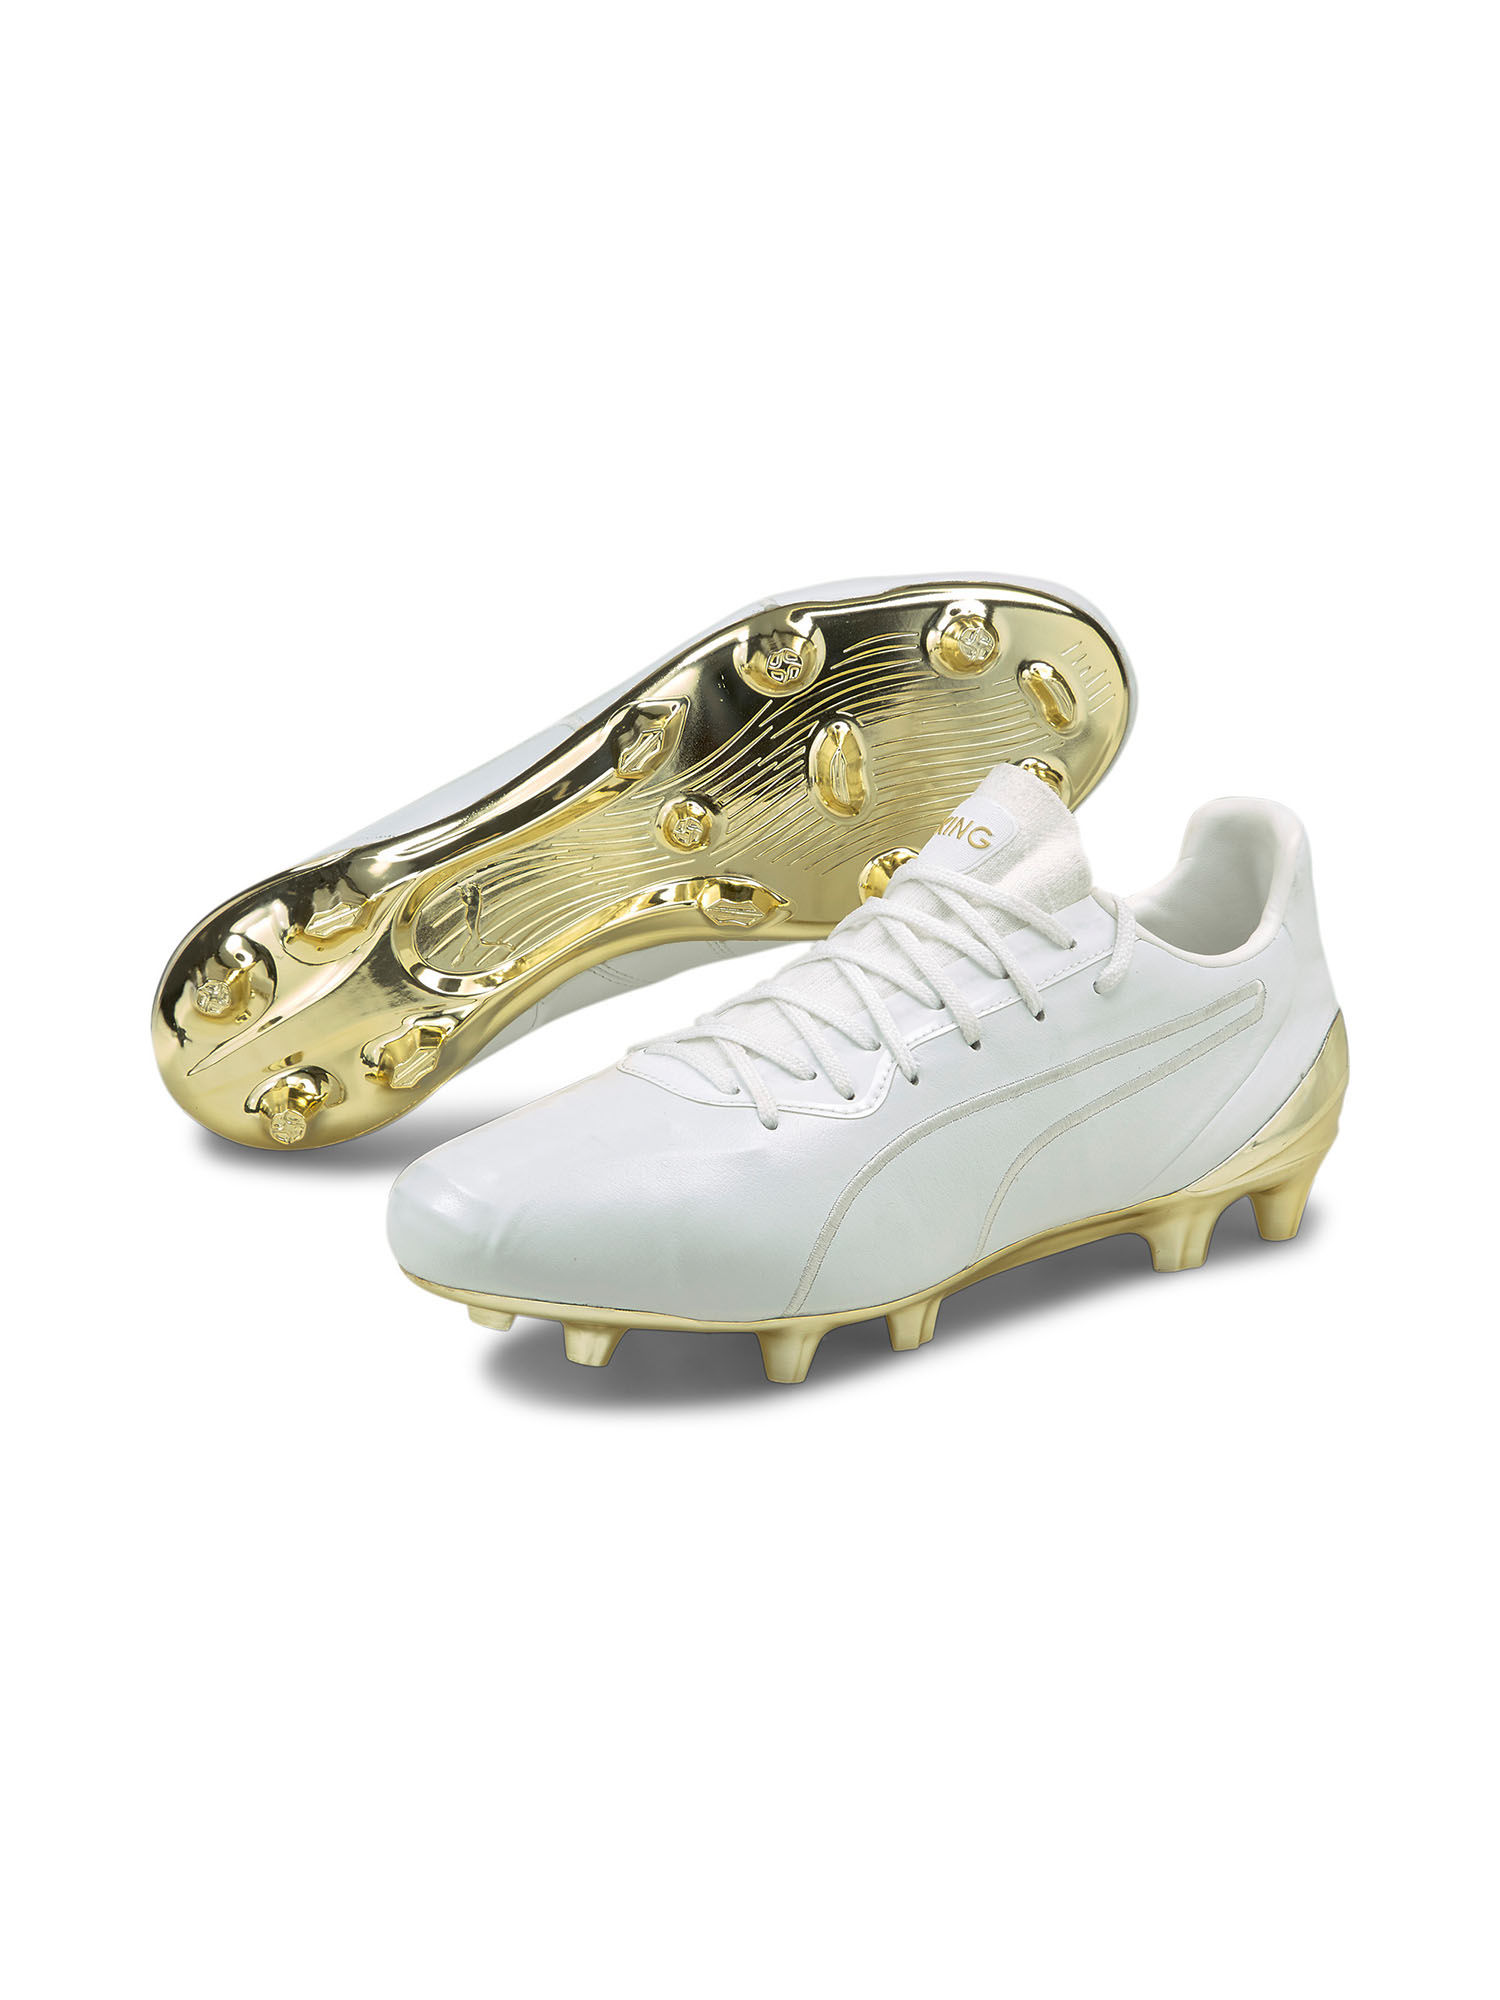 Puma King Platinum Cmeva Men's Fg |Ag| Football Shoes (UK 11)